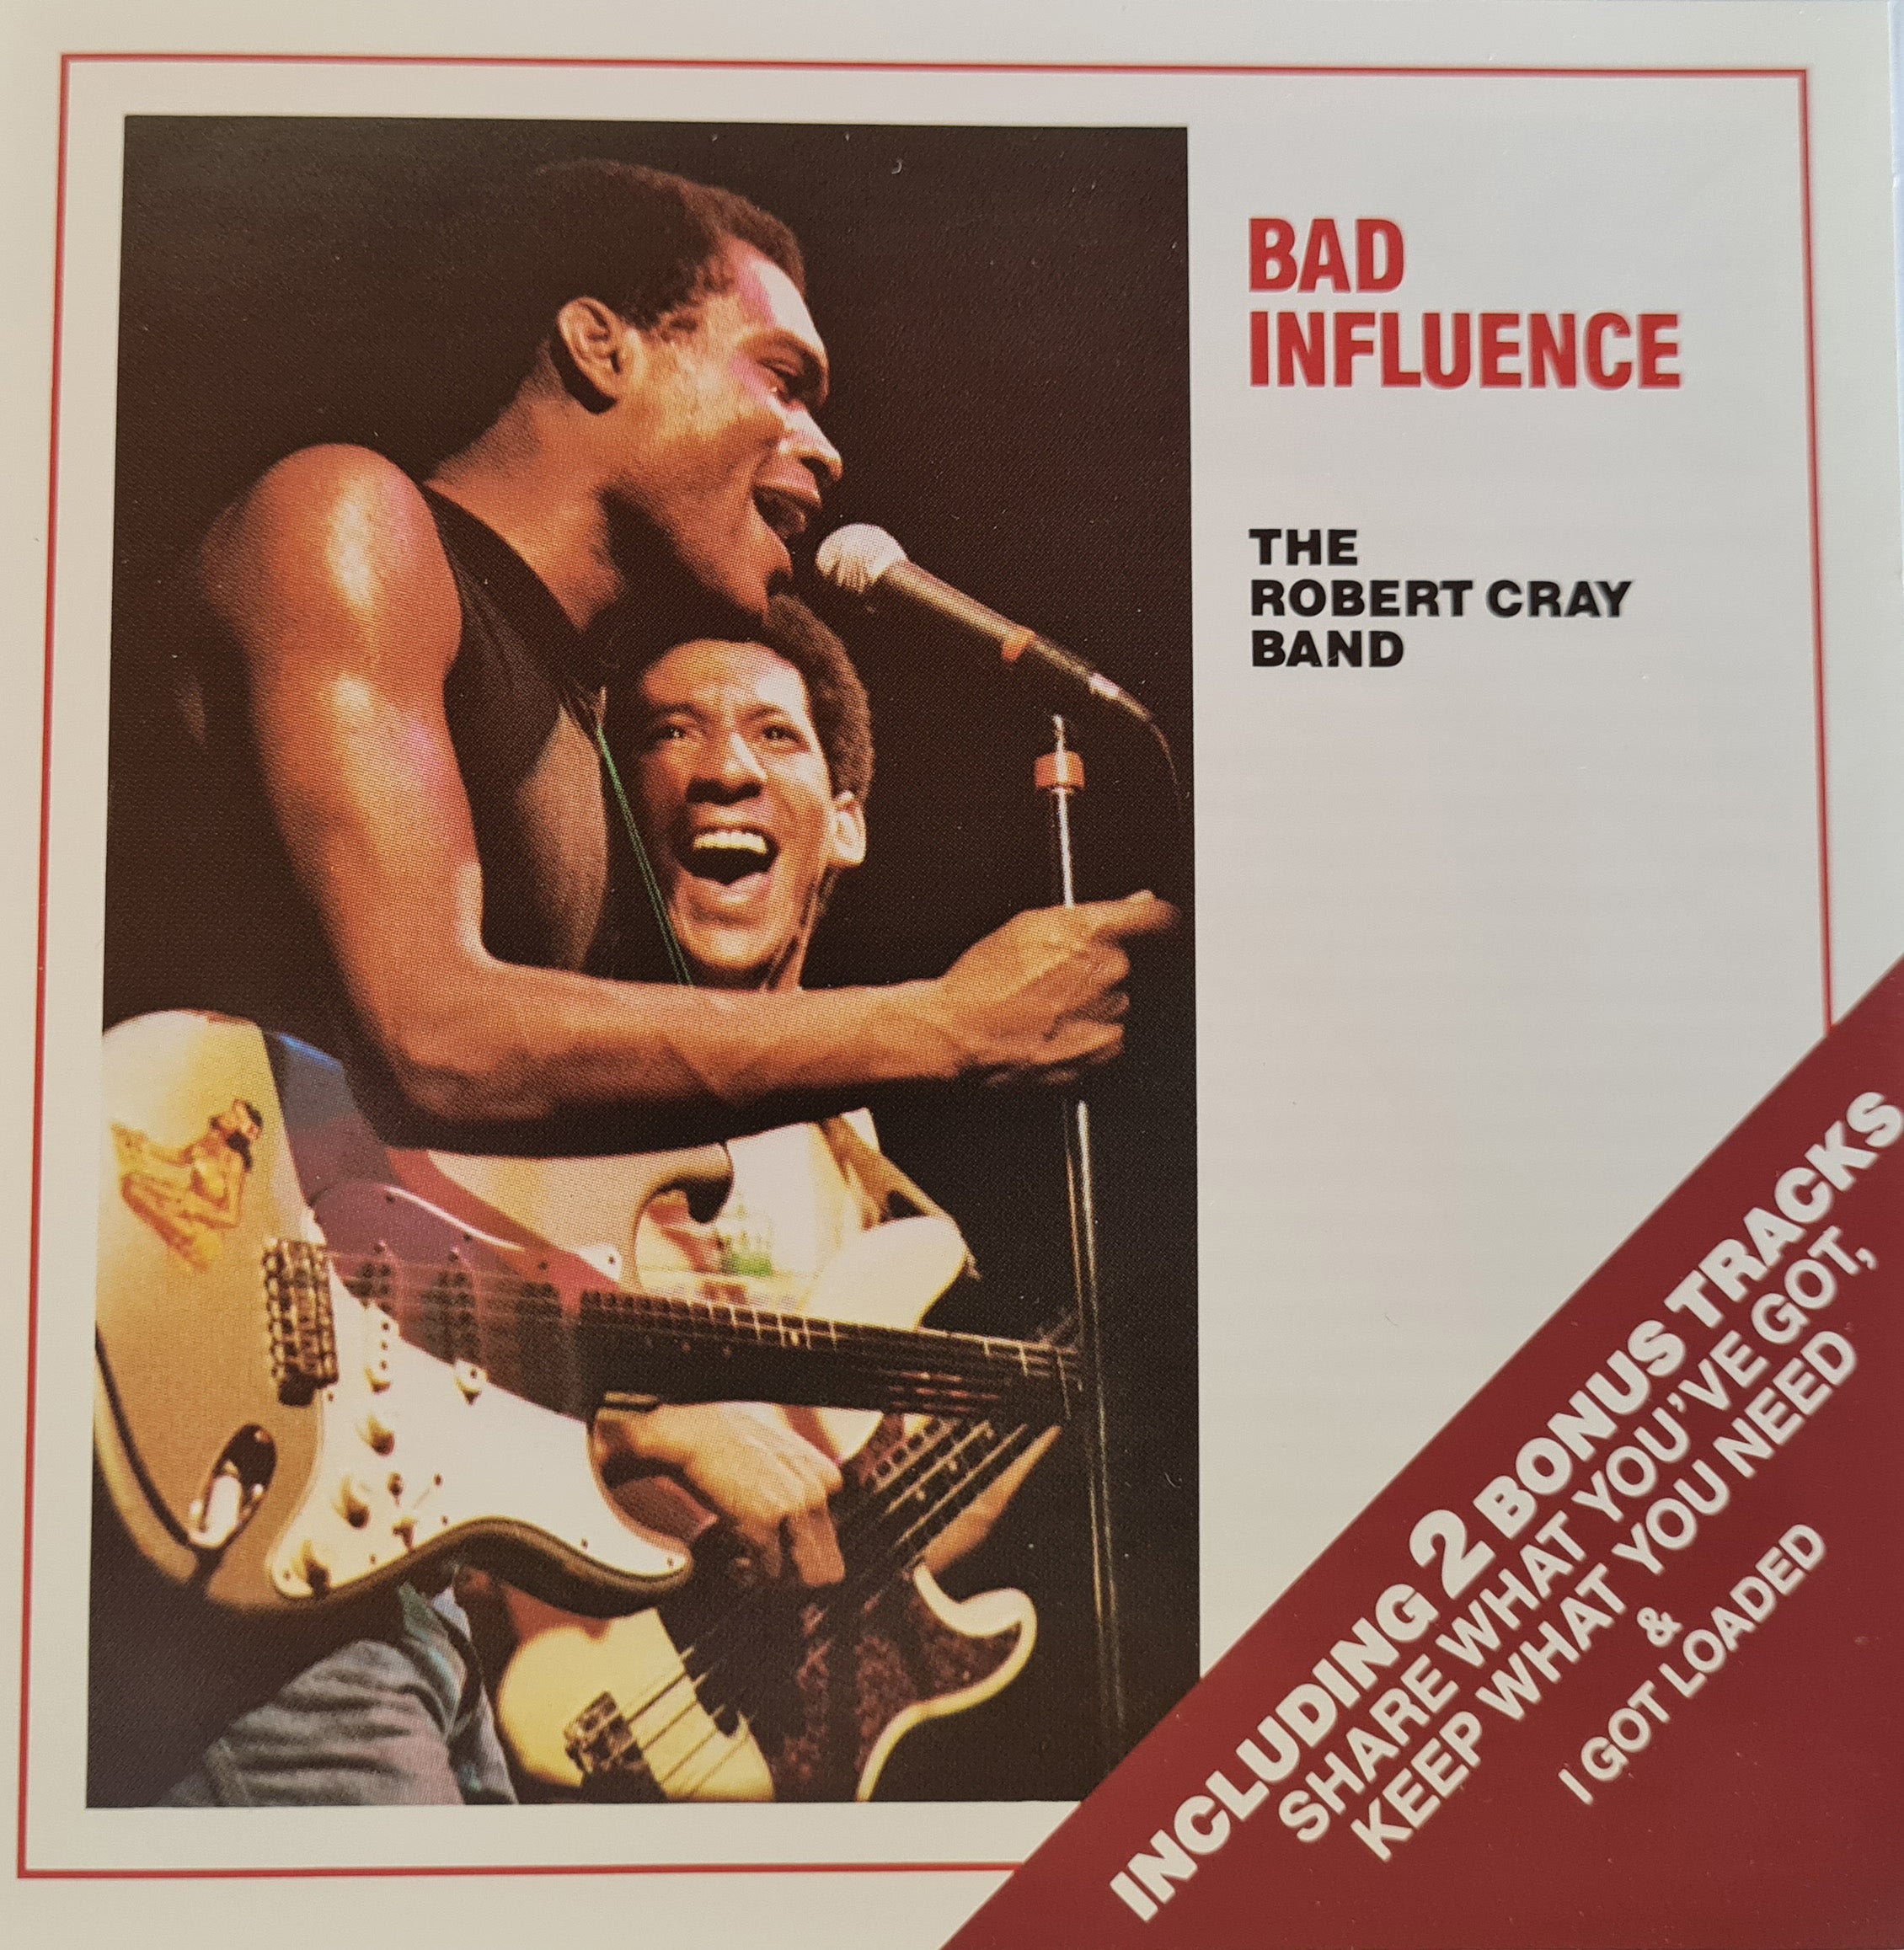 The Robert Cray Band - Bad Influence (CD)